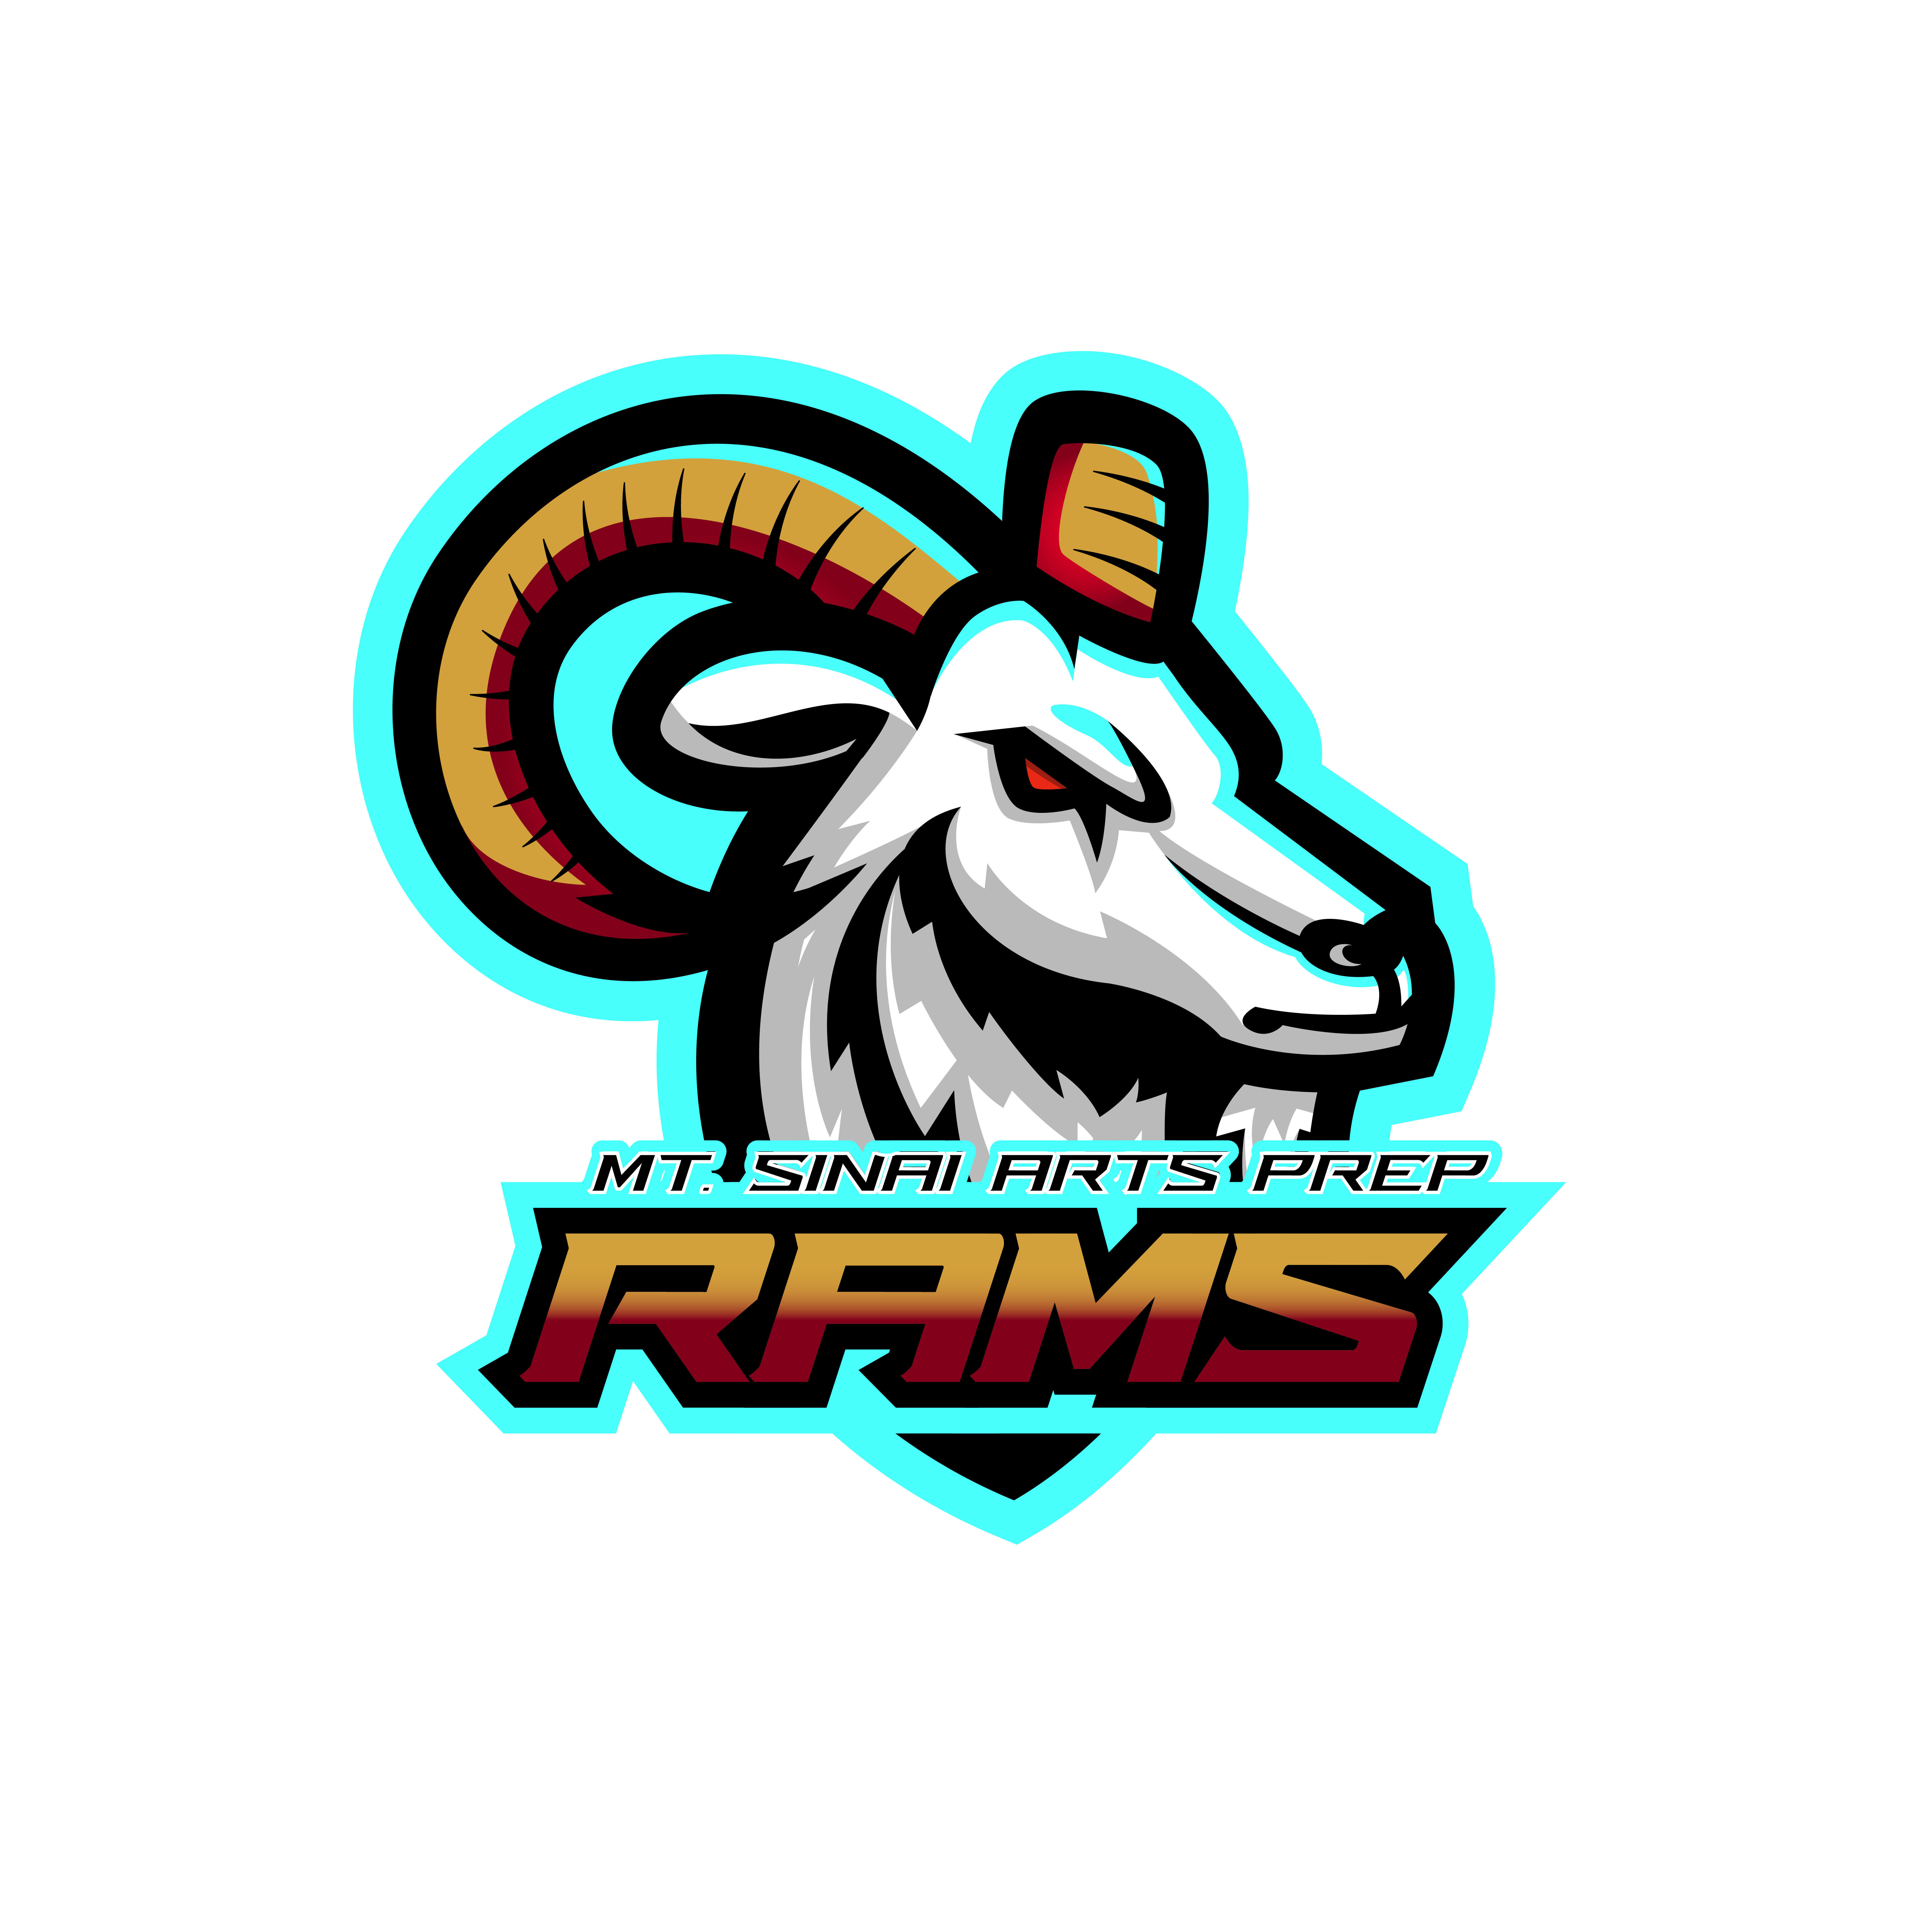 Rams mascot